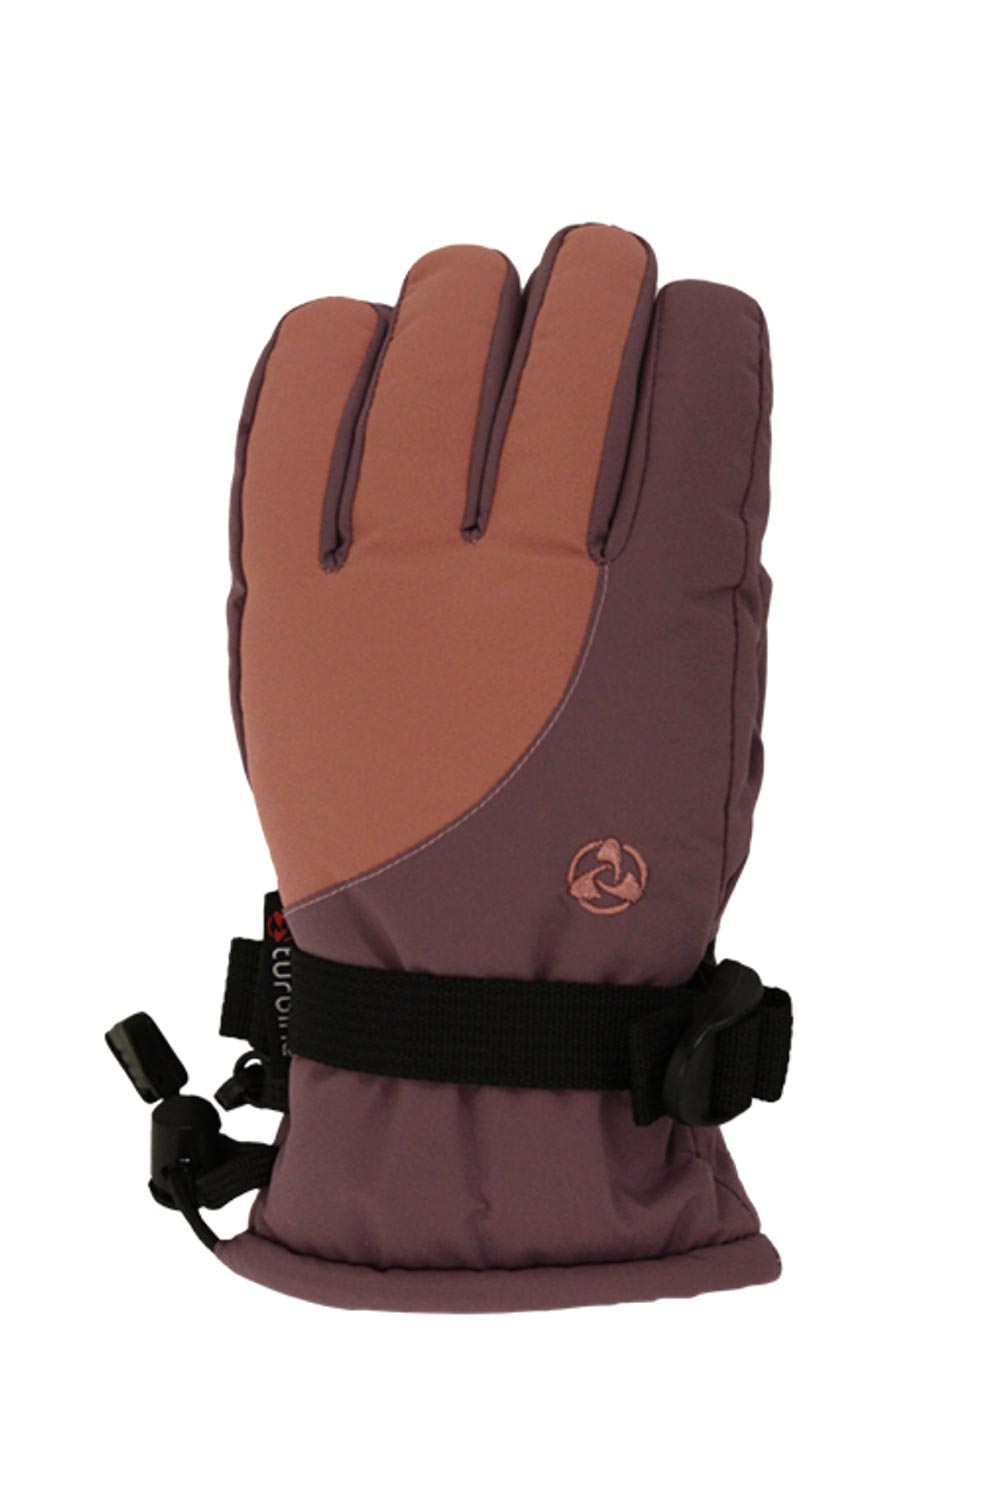 Girls' Turbine Arya ski glove, purple and pink